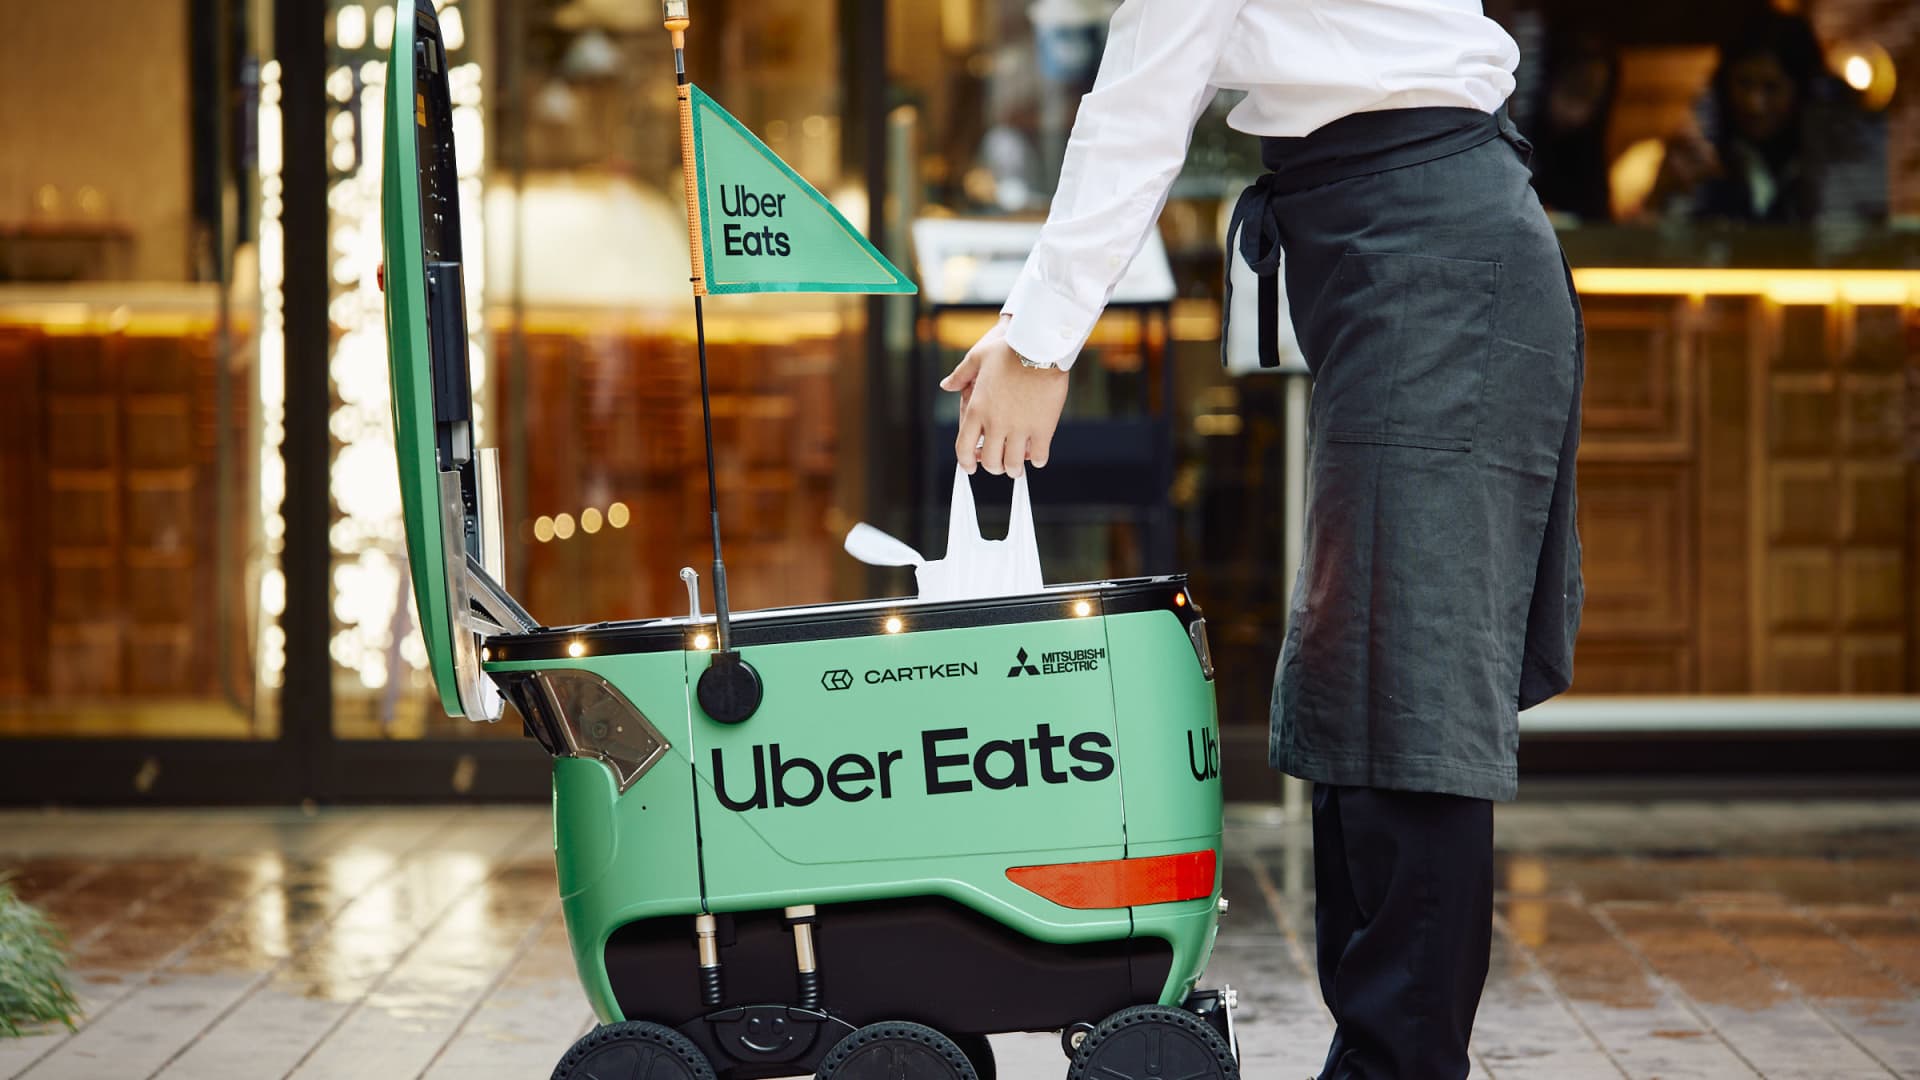 Uber Eats to begin self-driving robot deliveries in Japan